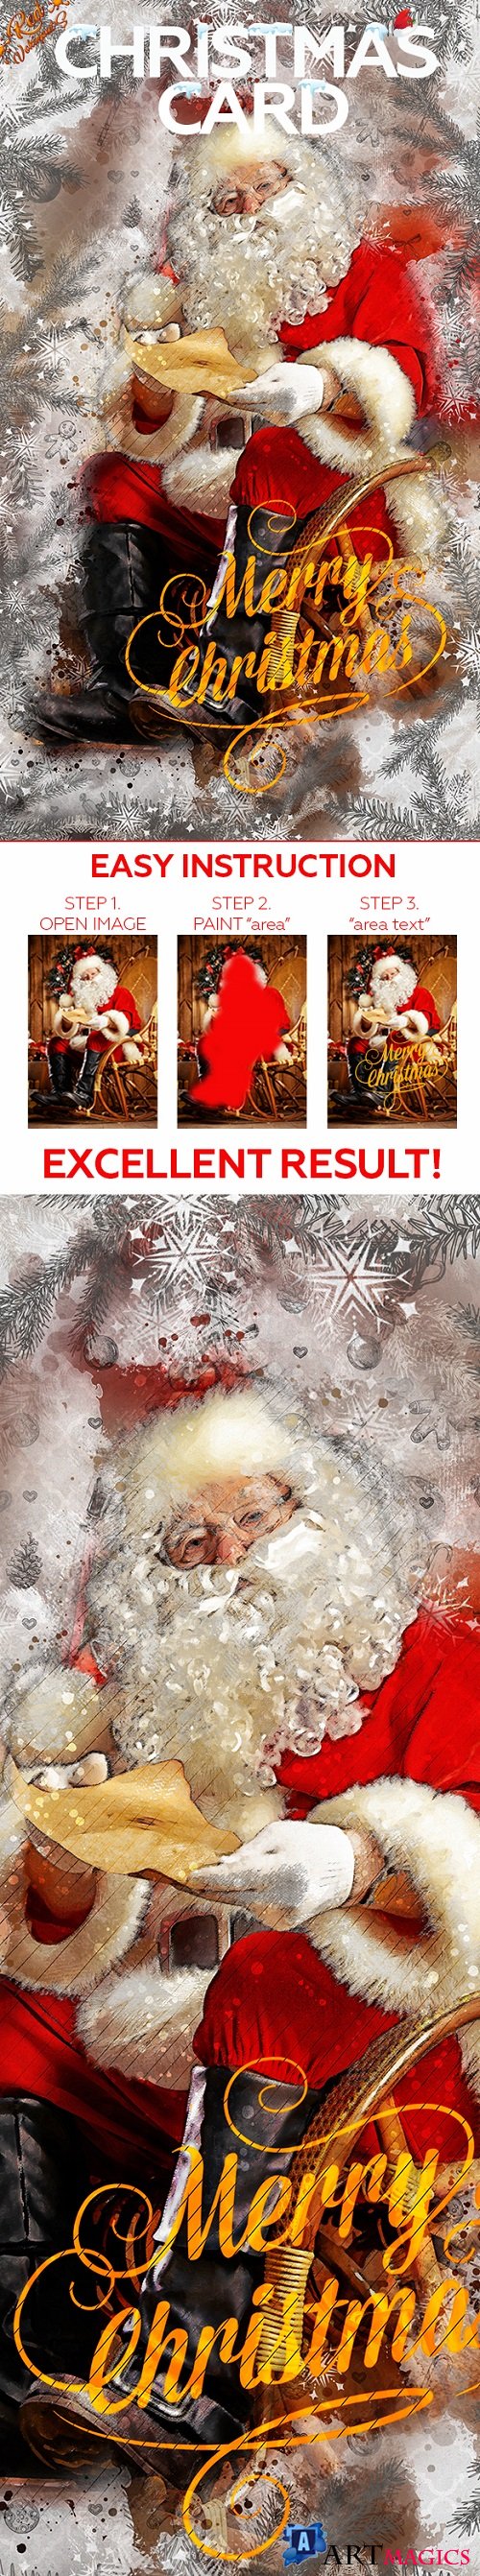 Christmas Card Photoshop Action 21041258